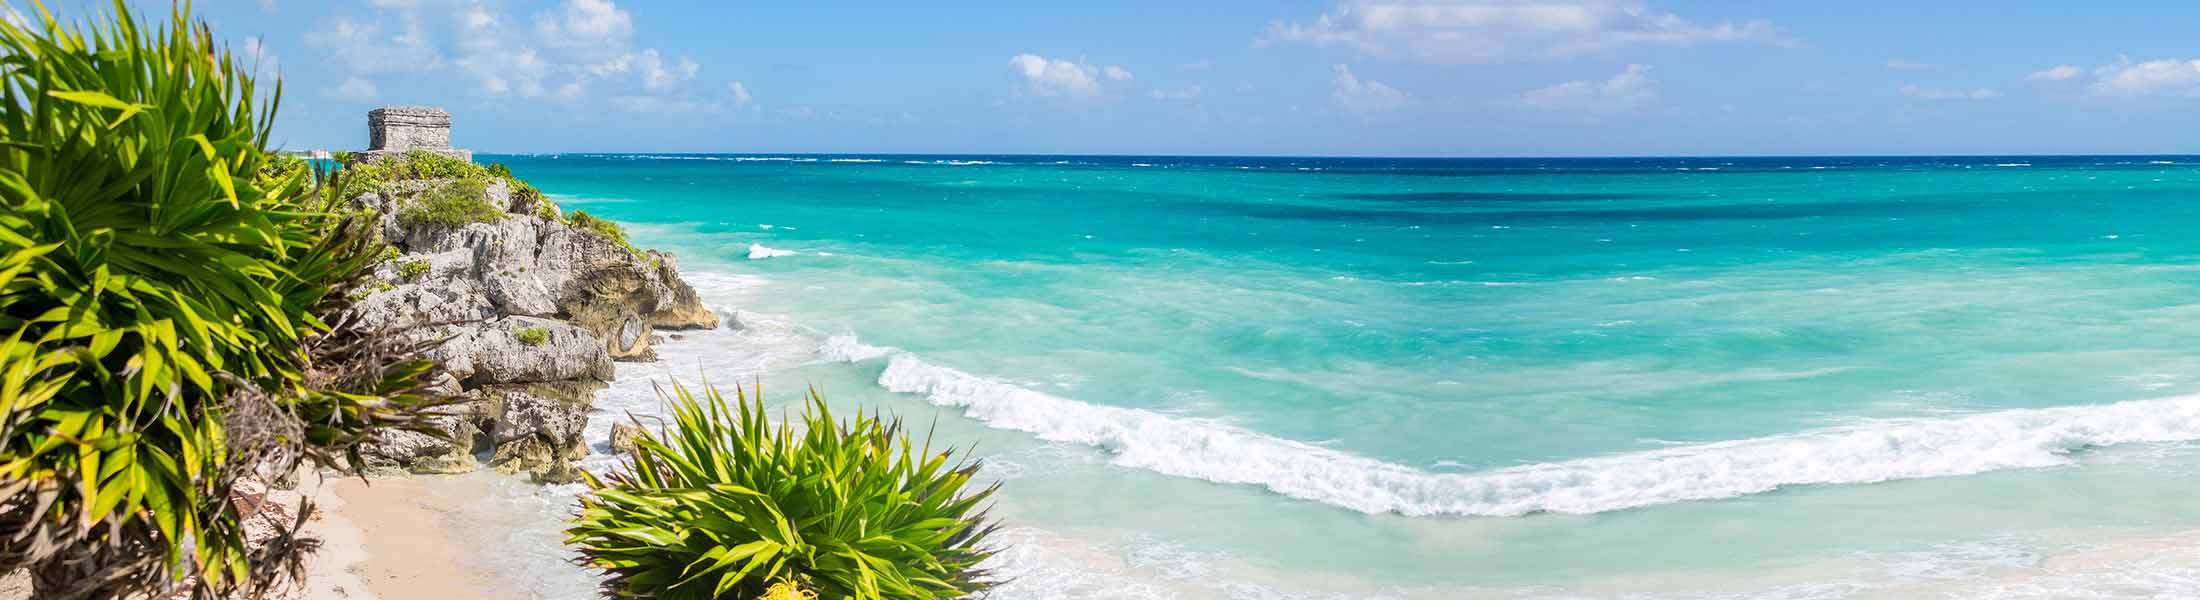 Krystal Cancun Timeshare - Krystal International Vacation Club